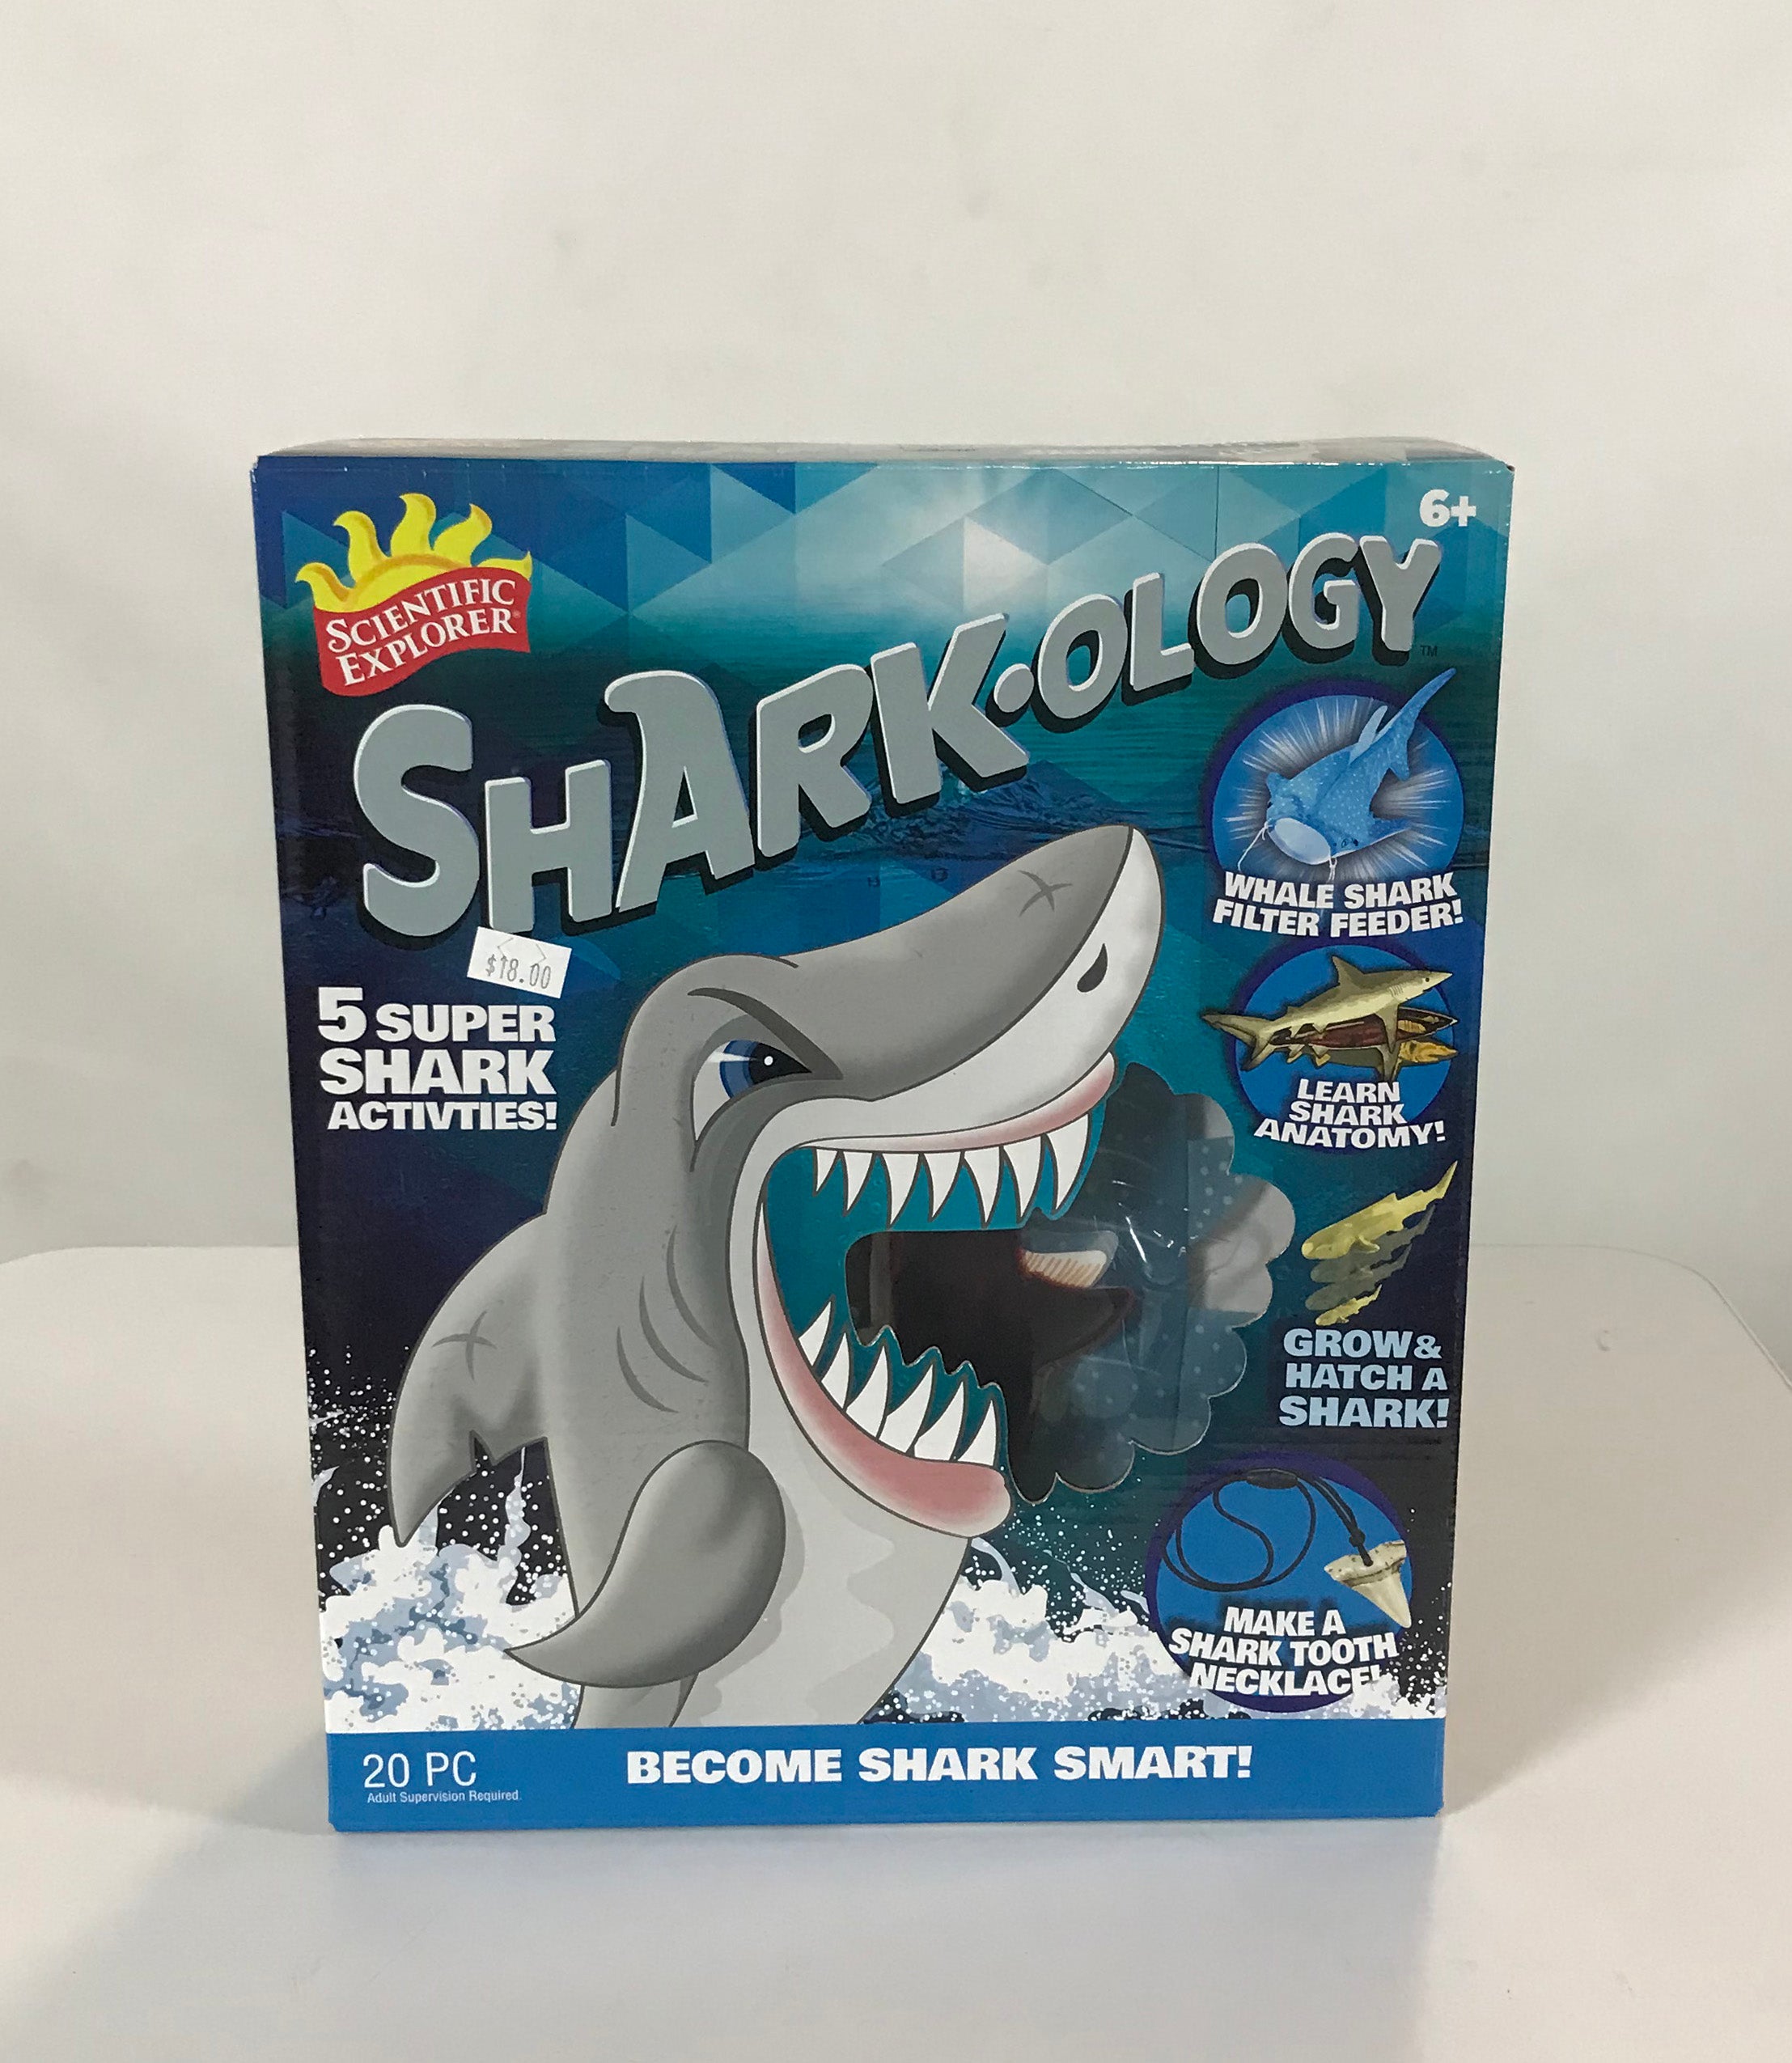 Scientific Explorer Sharkology Kit